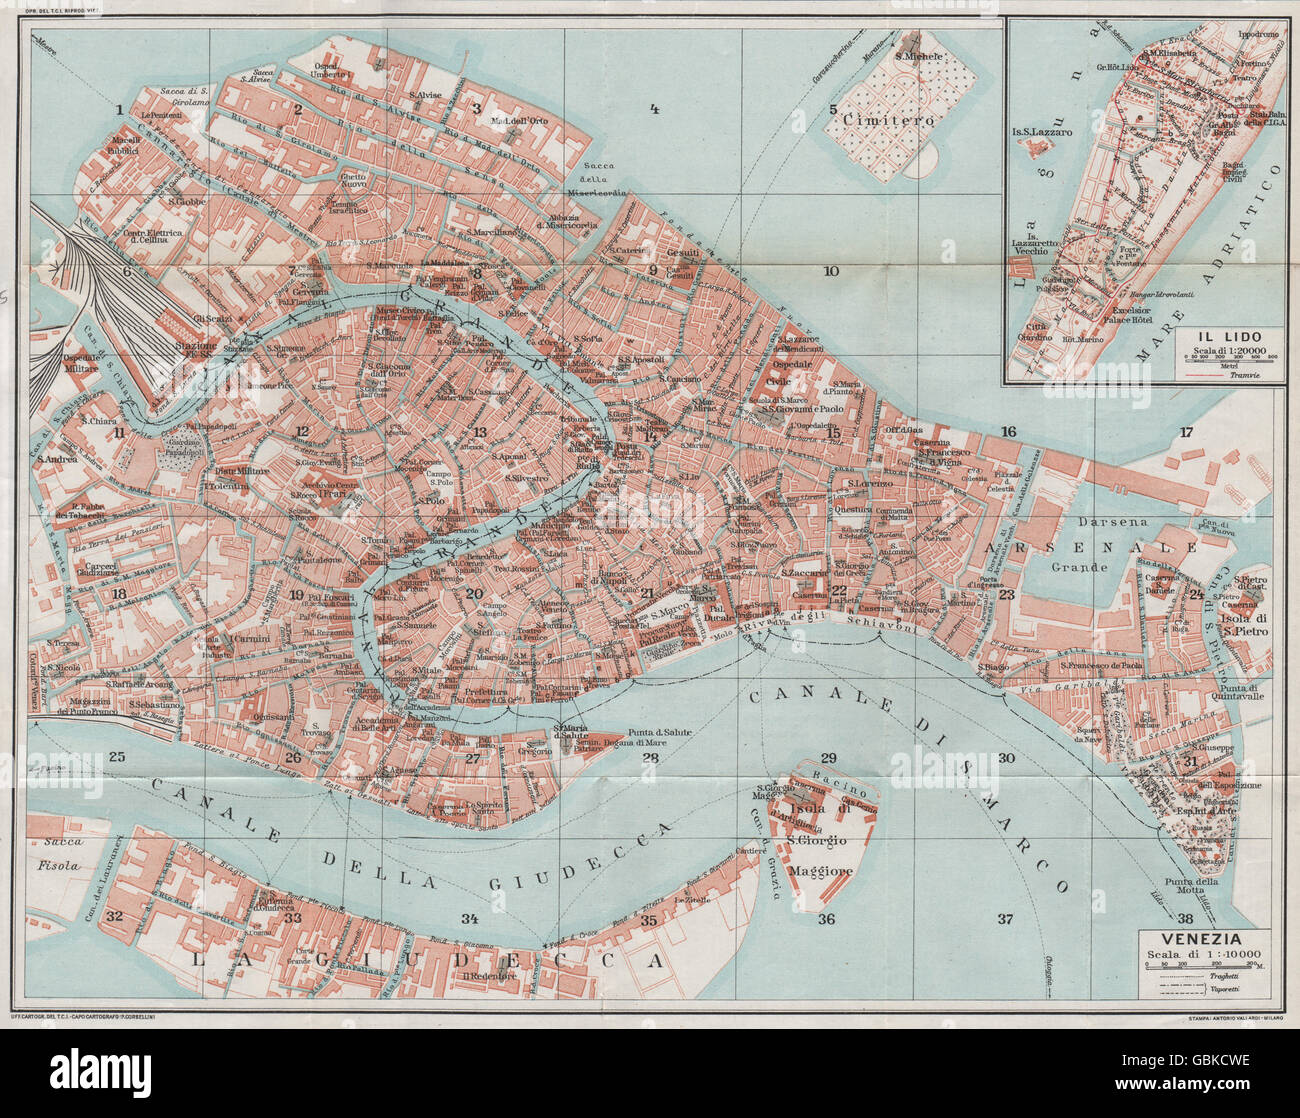 VENEZIA. Vintage town city map plan. Inset Lido. Venice, 1924 Stock Photo